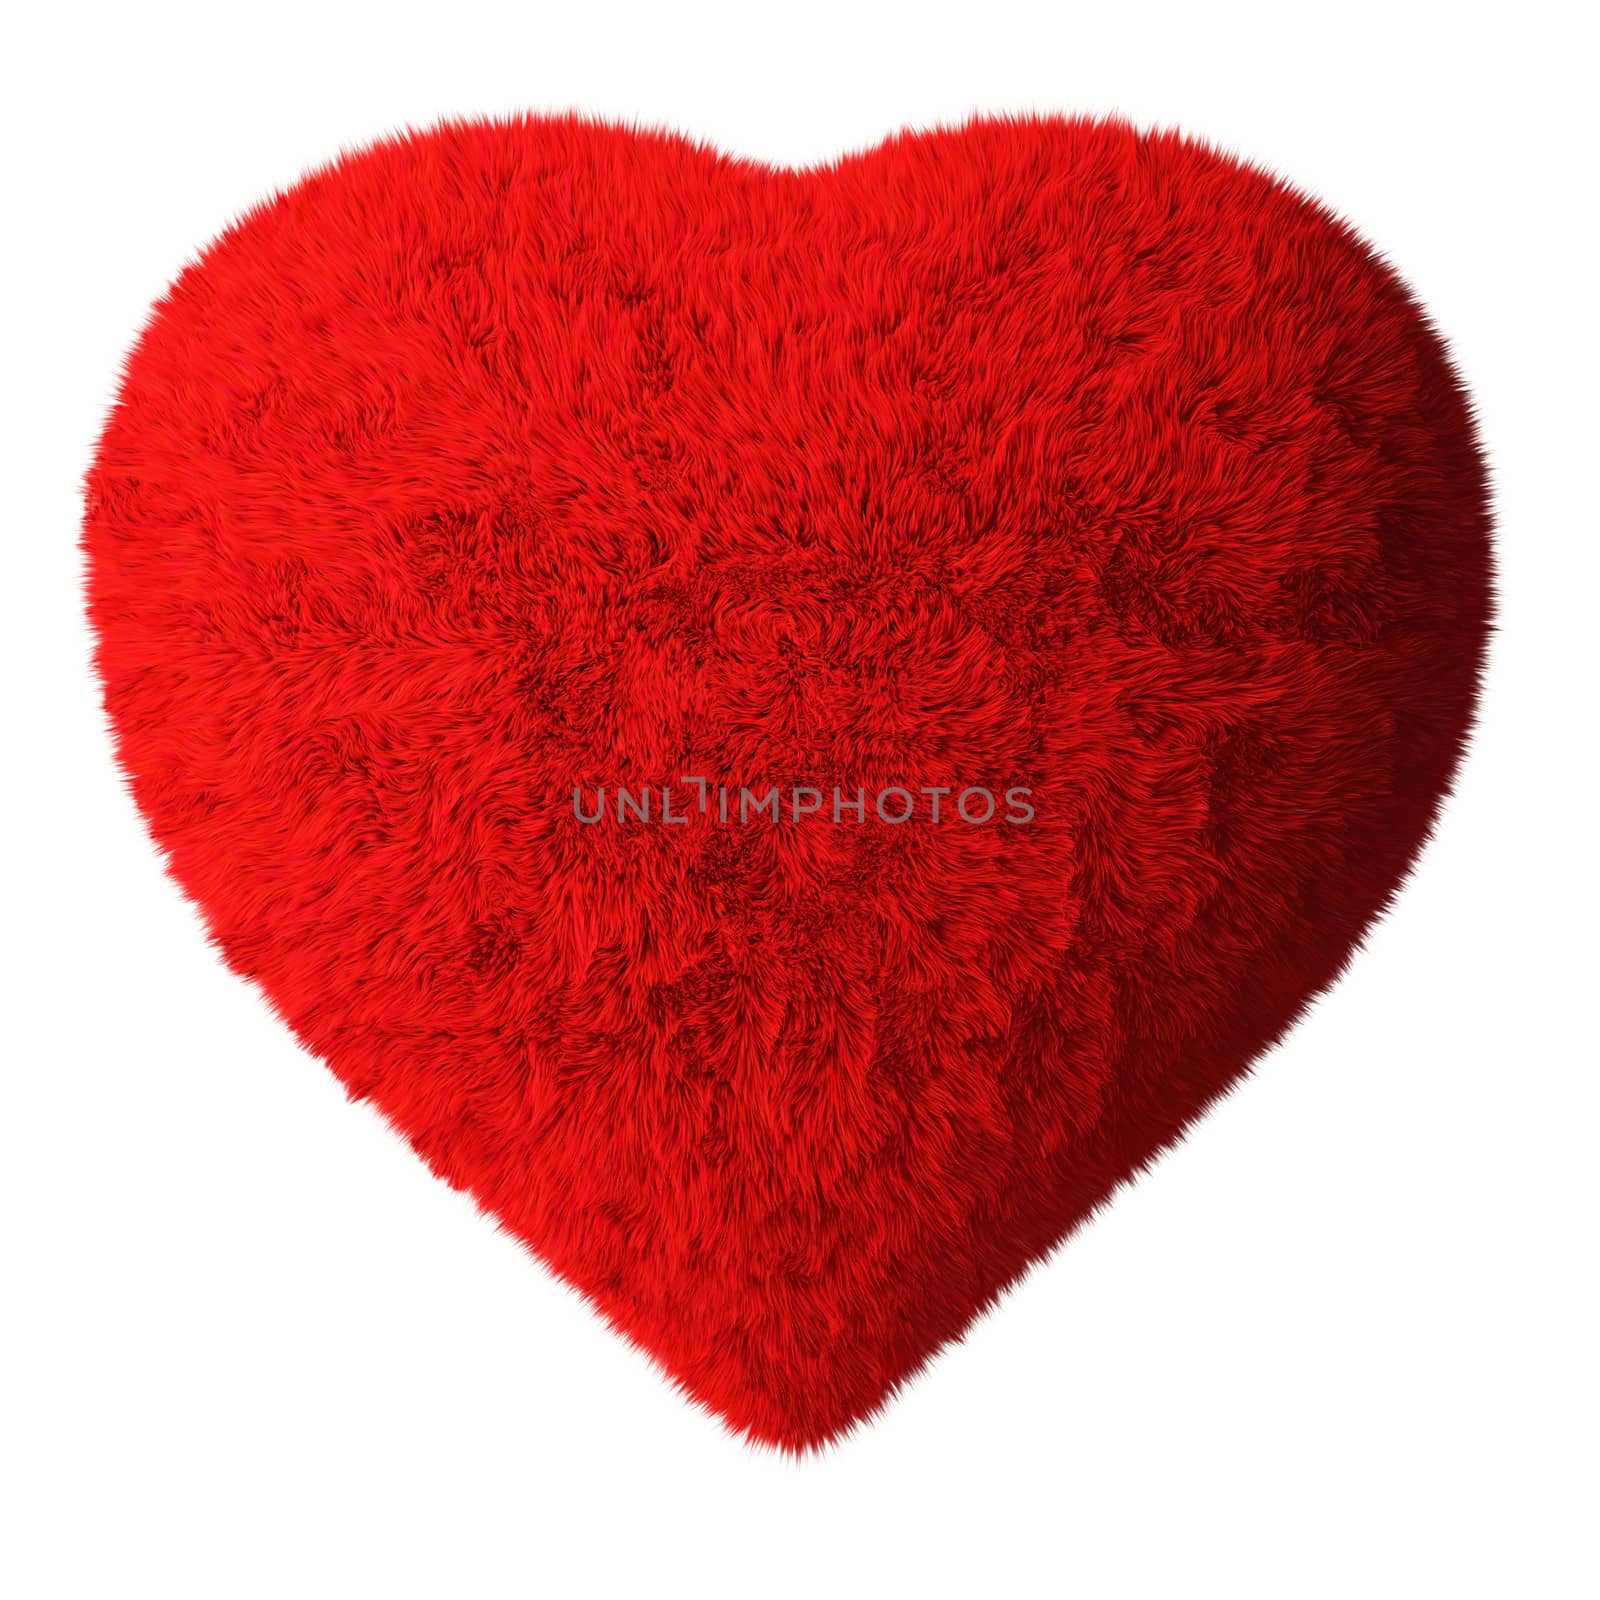 Fluffy Heart by ayzek